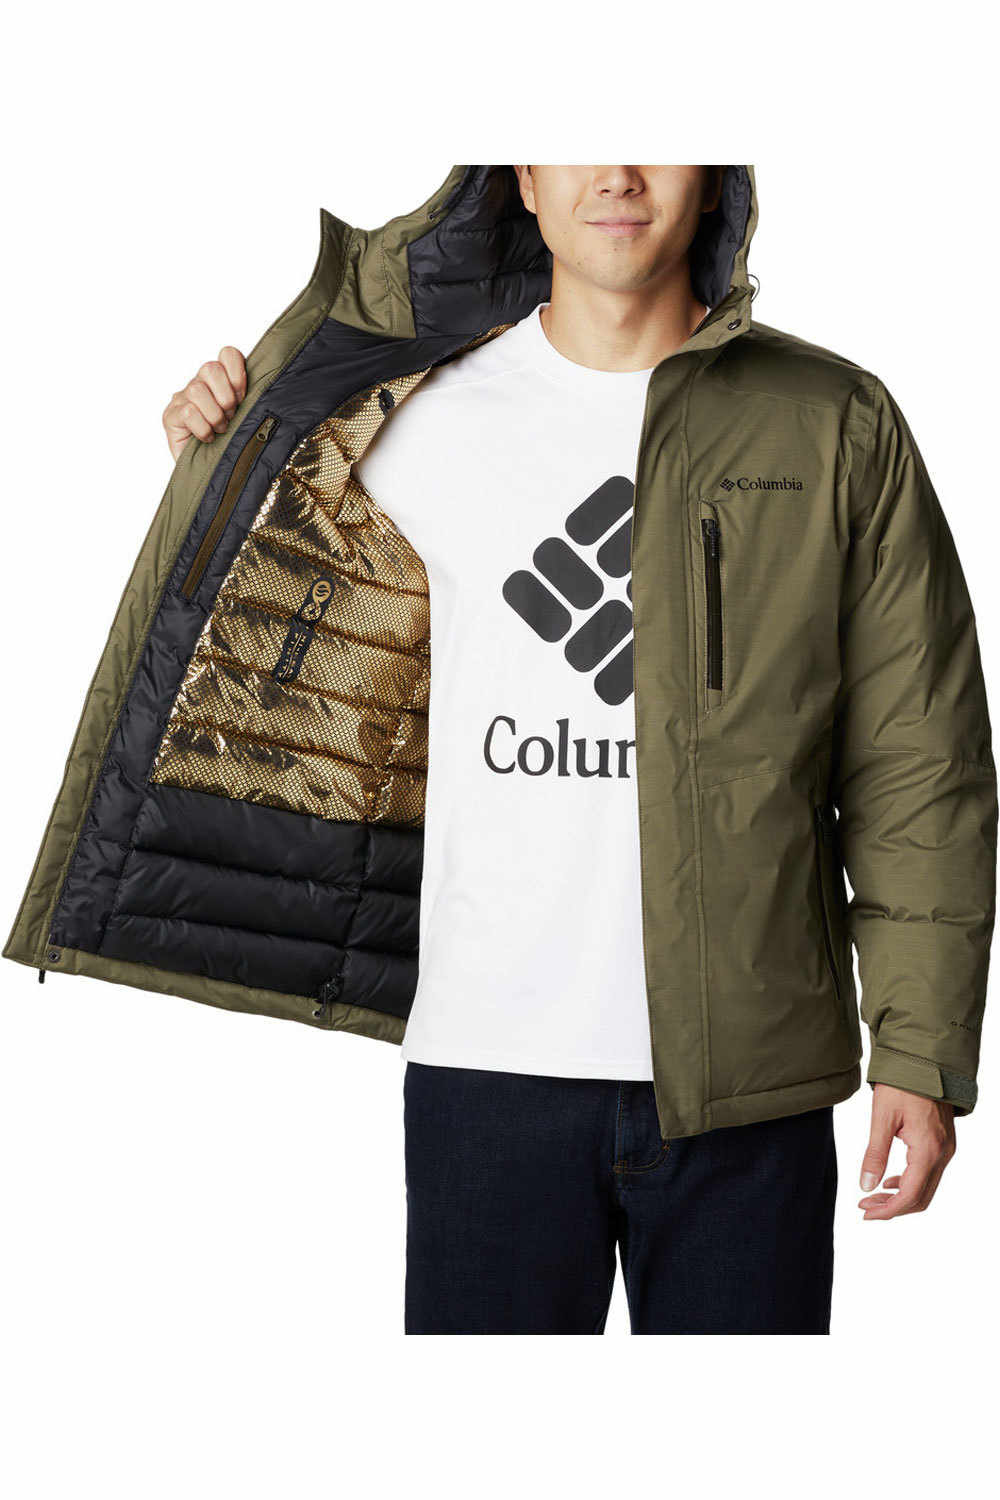 Columbia chaqueta impermeable insulada hombre Oak Harbor Insulated Jacket vista frontal